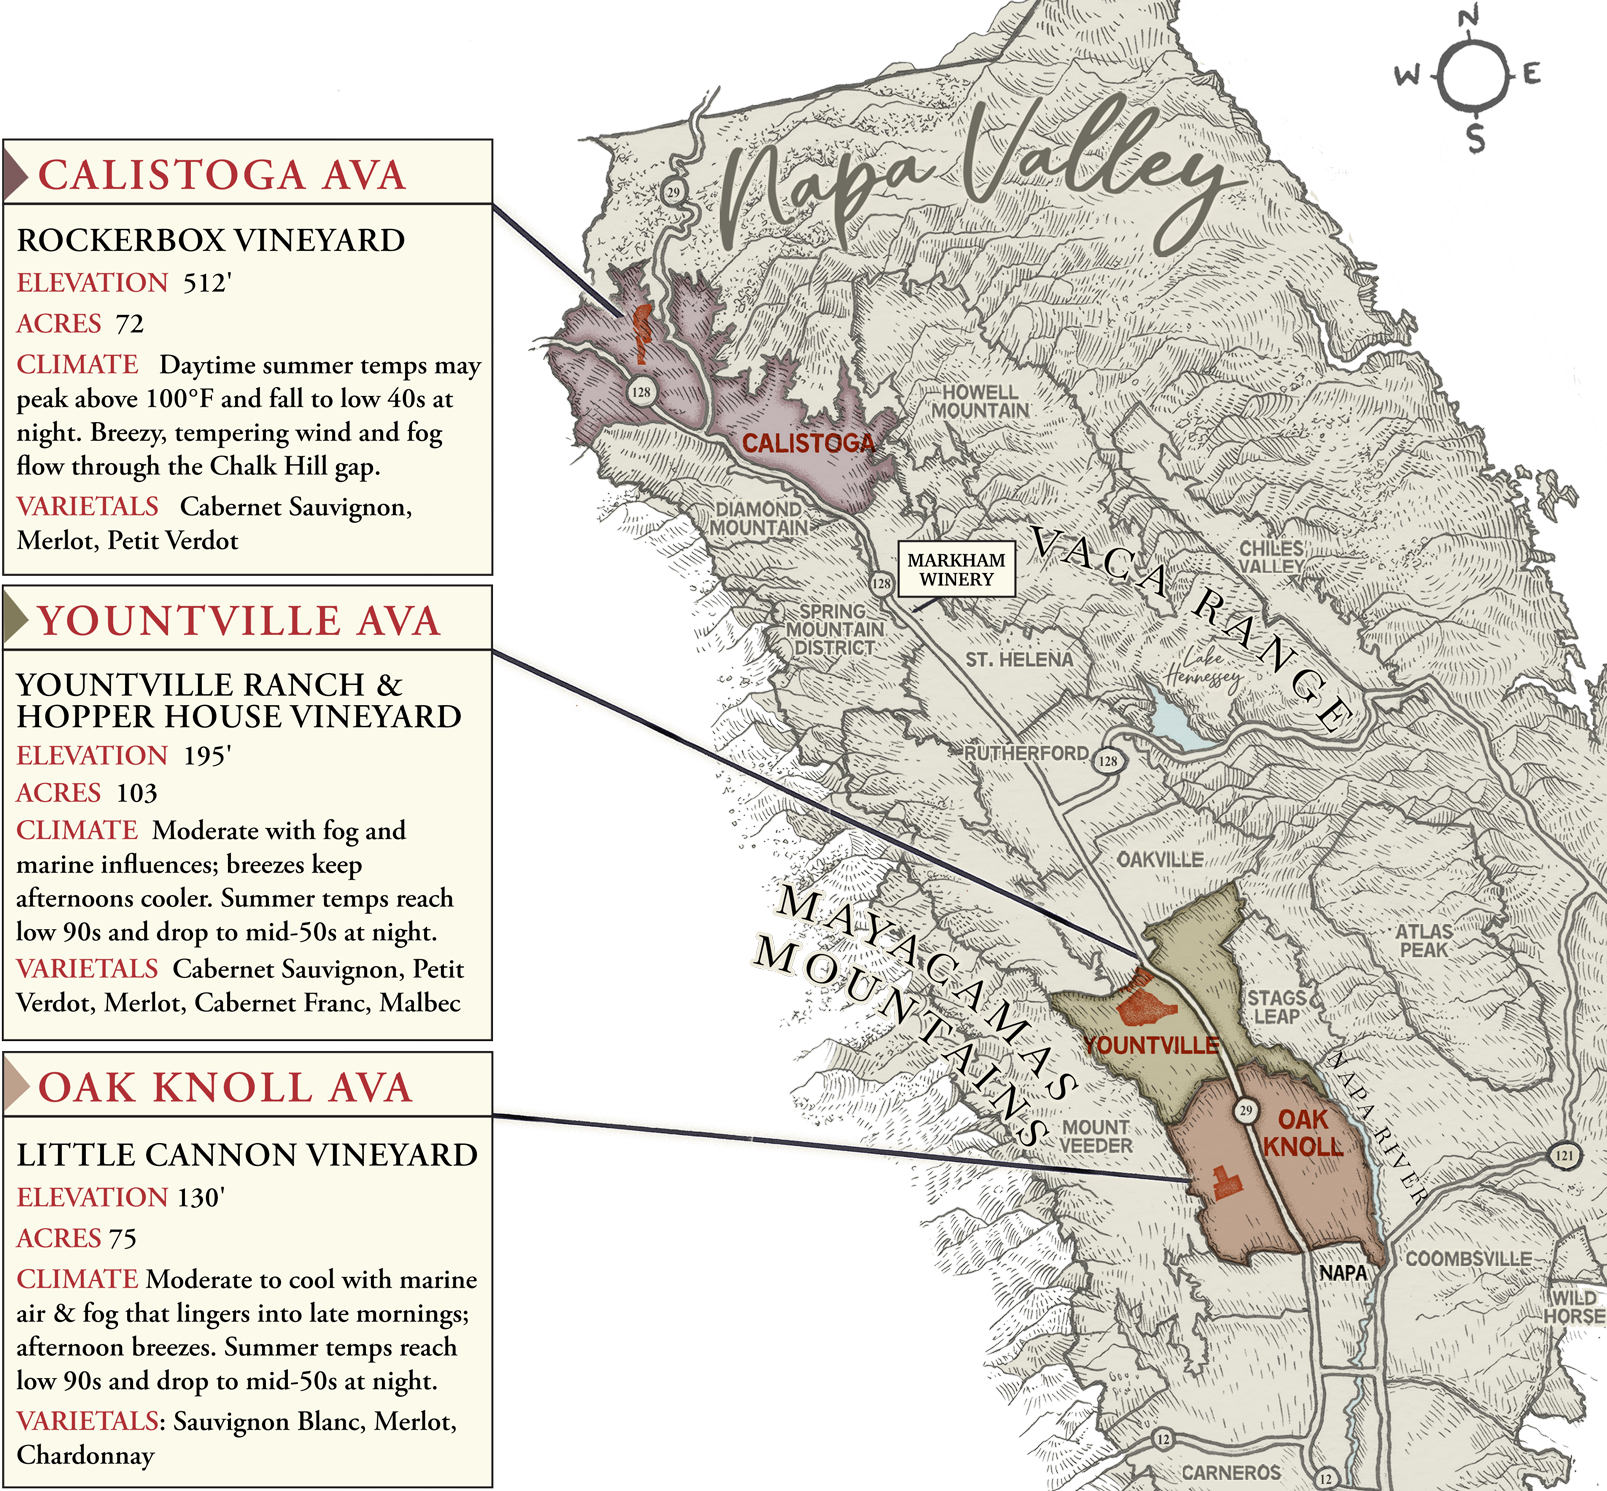 Map of Napa Valley showing Markham vineyard properties